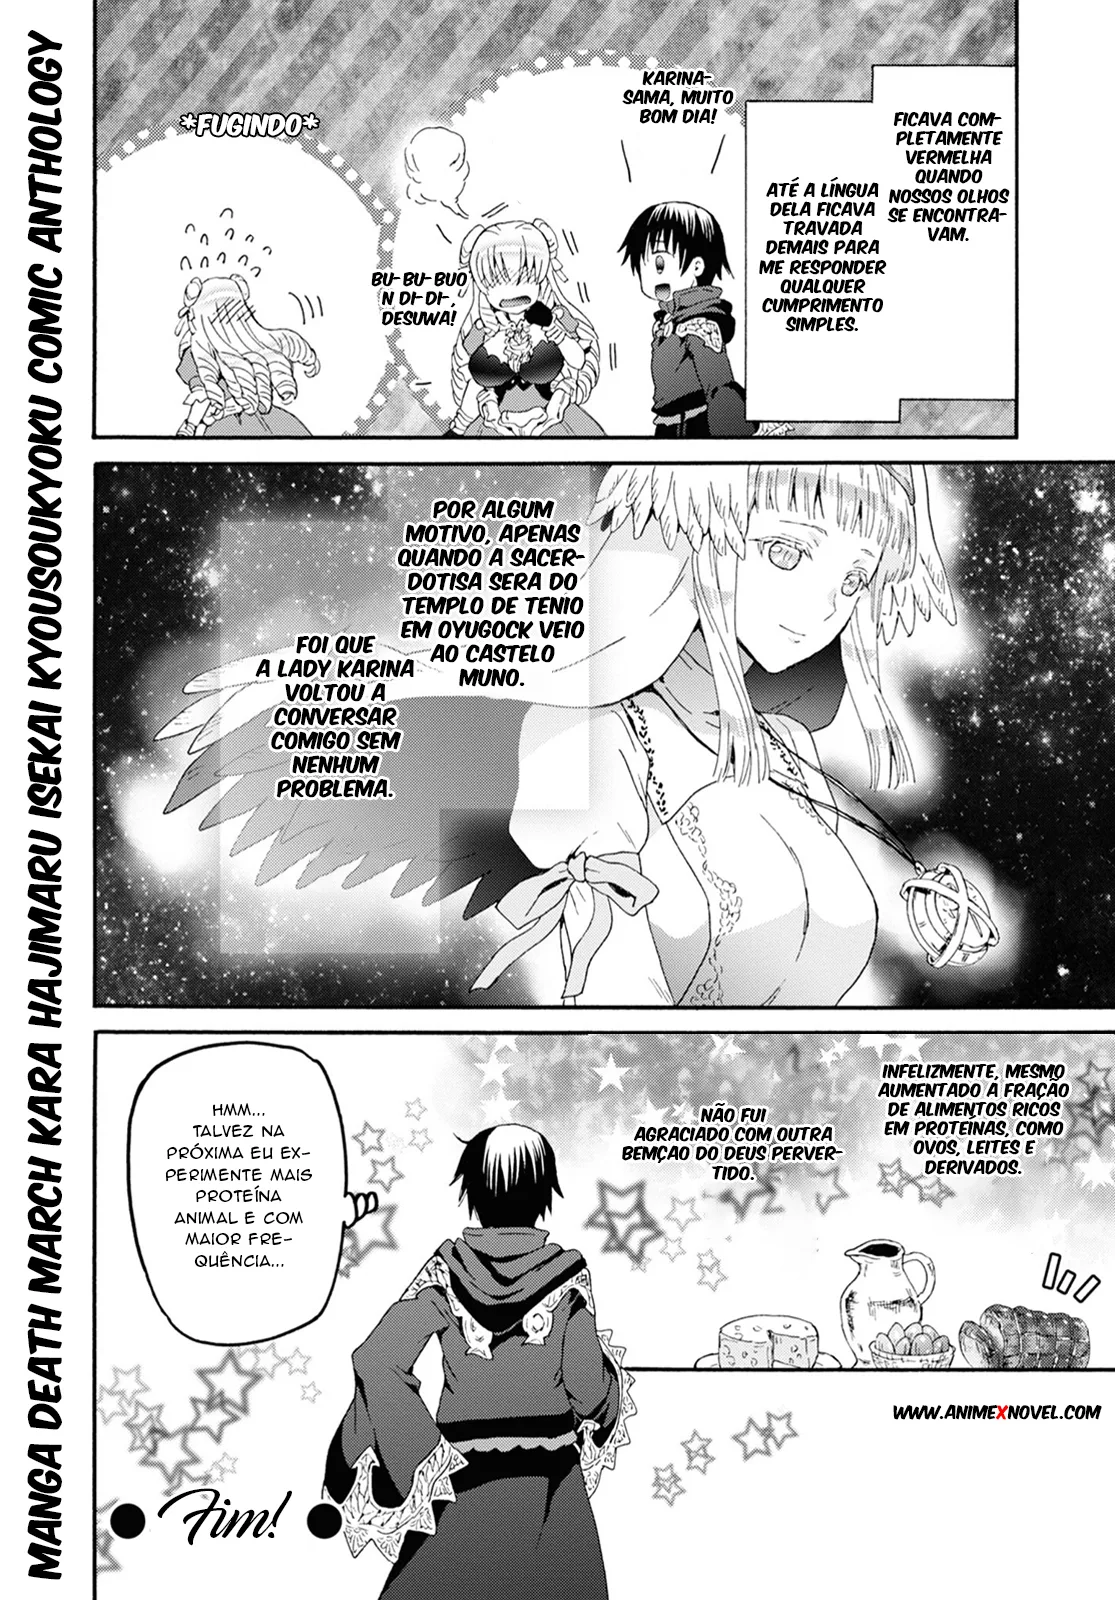 Comic Dragon Age: Death March Kara Hajimaru Isekai Kyousoukyoku / Death March To The Parallel World Rhapsody Manga Comic Anthology 01